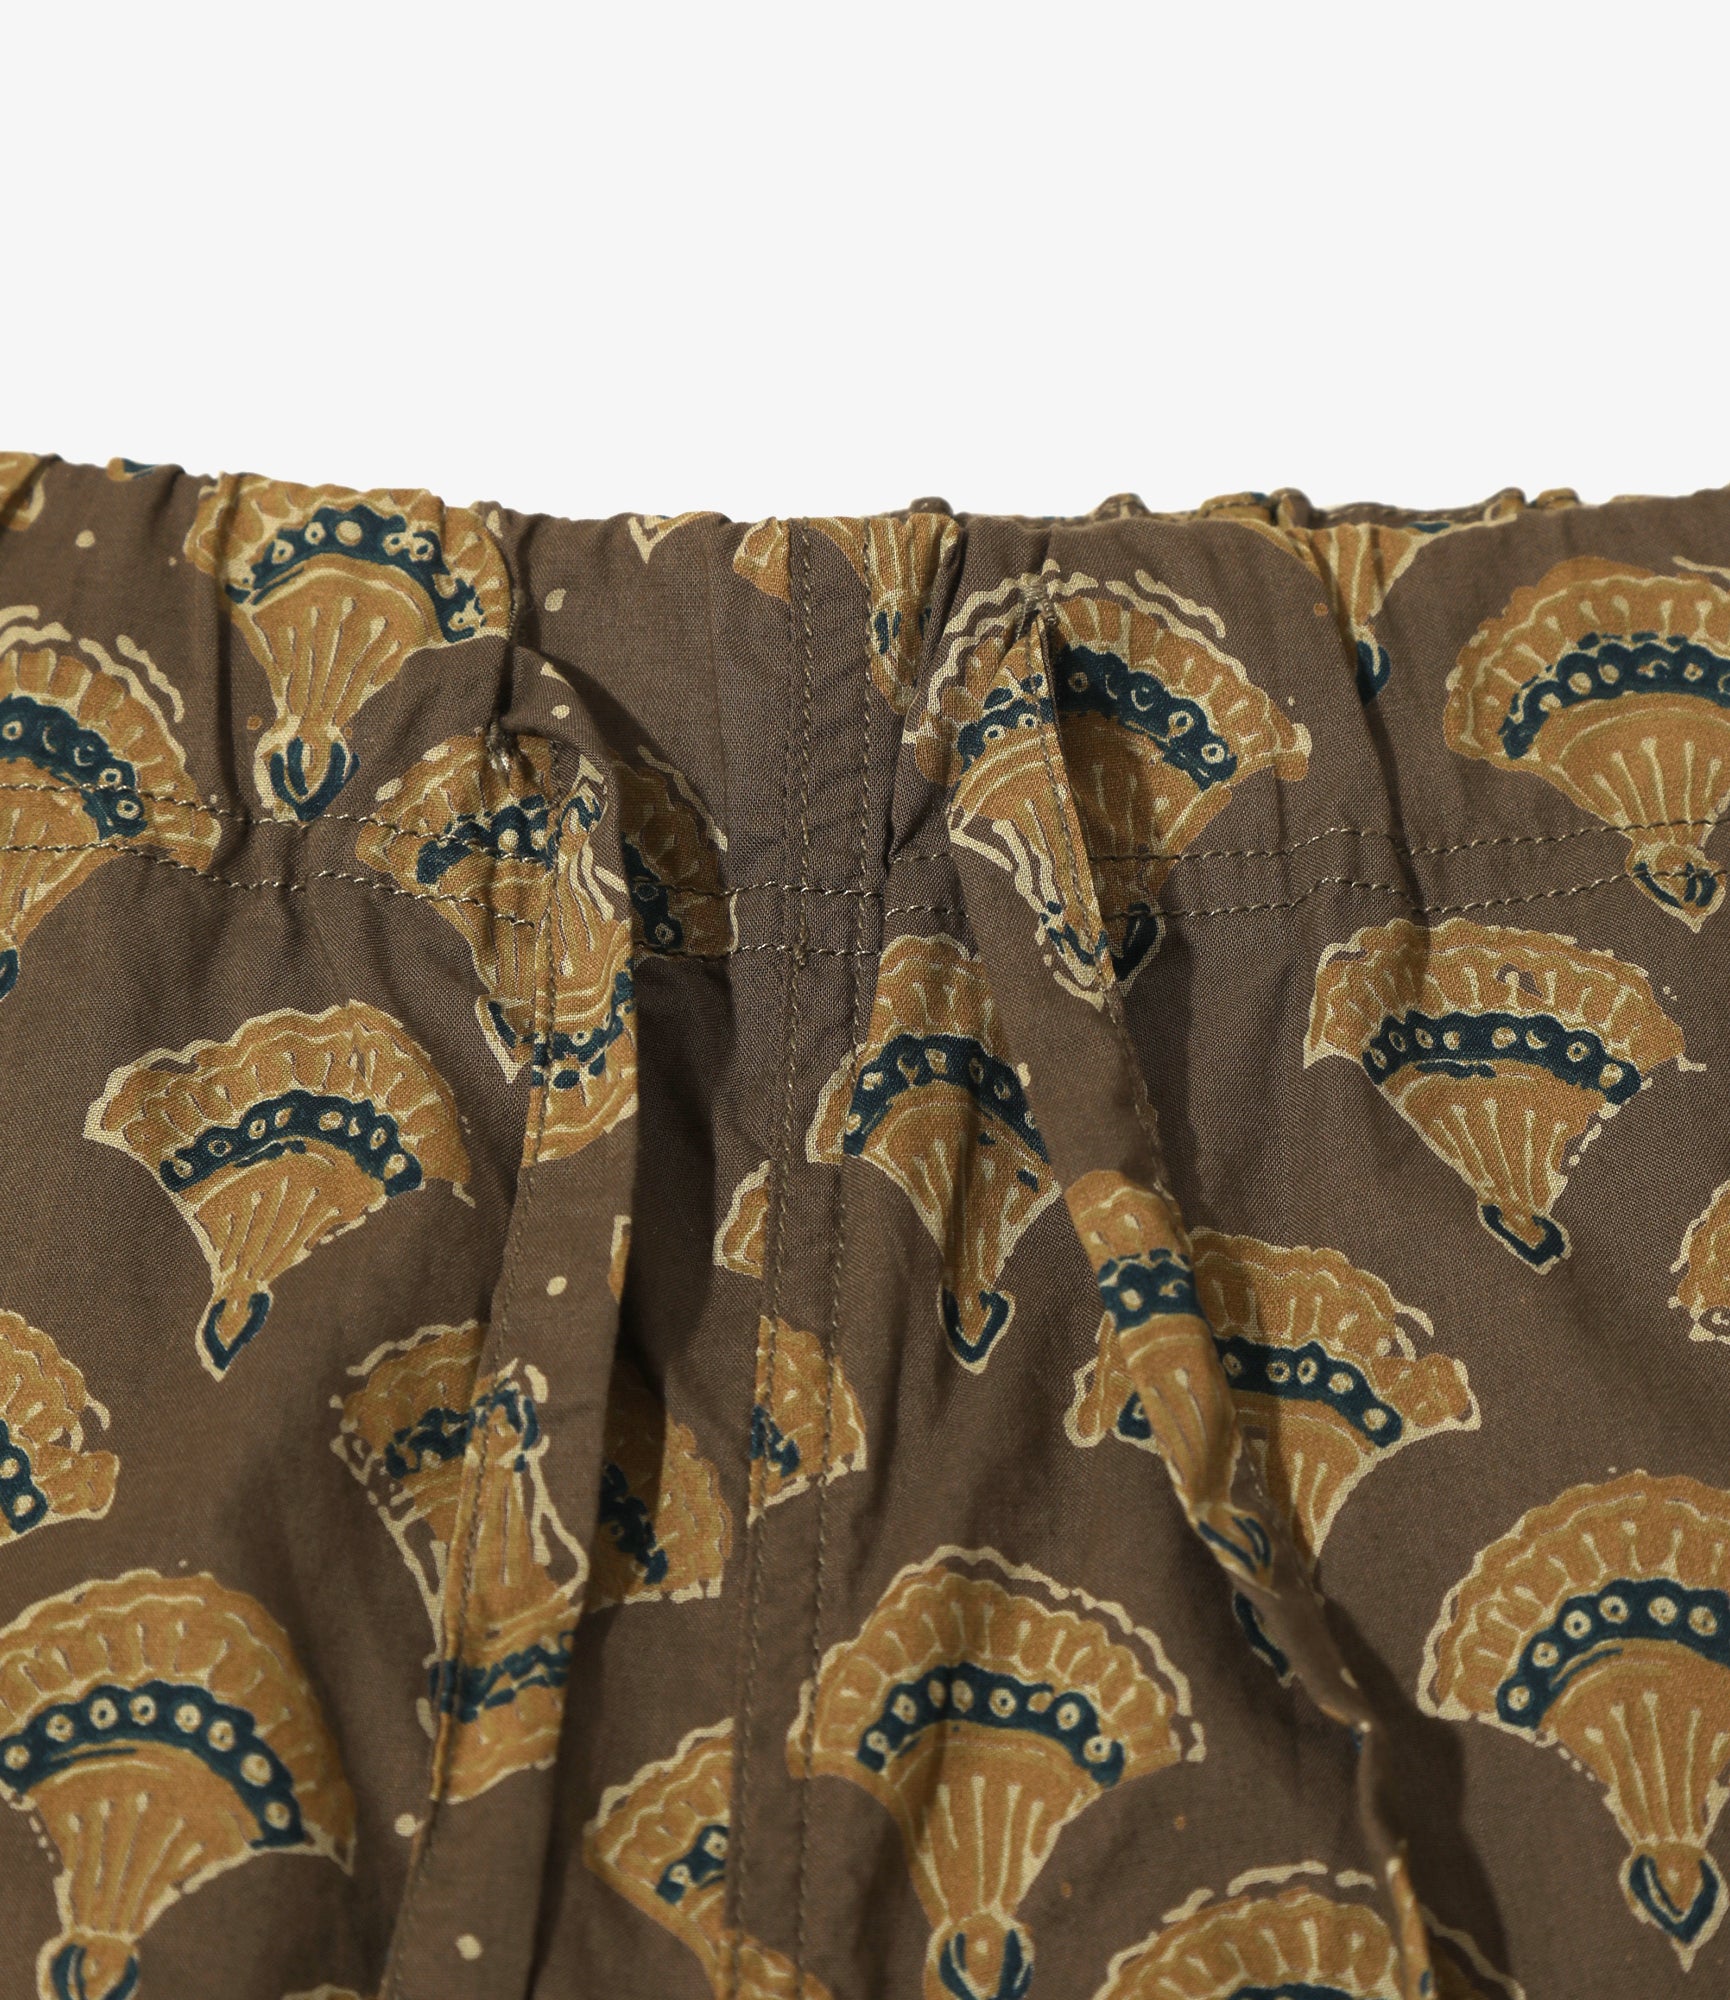 South2 West8 String Slack Pant - Cotton Cloth / Batik Printed - Taupe